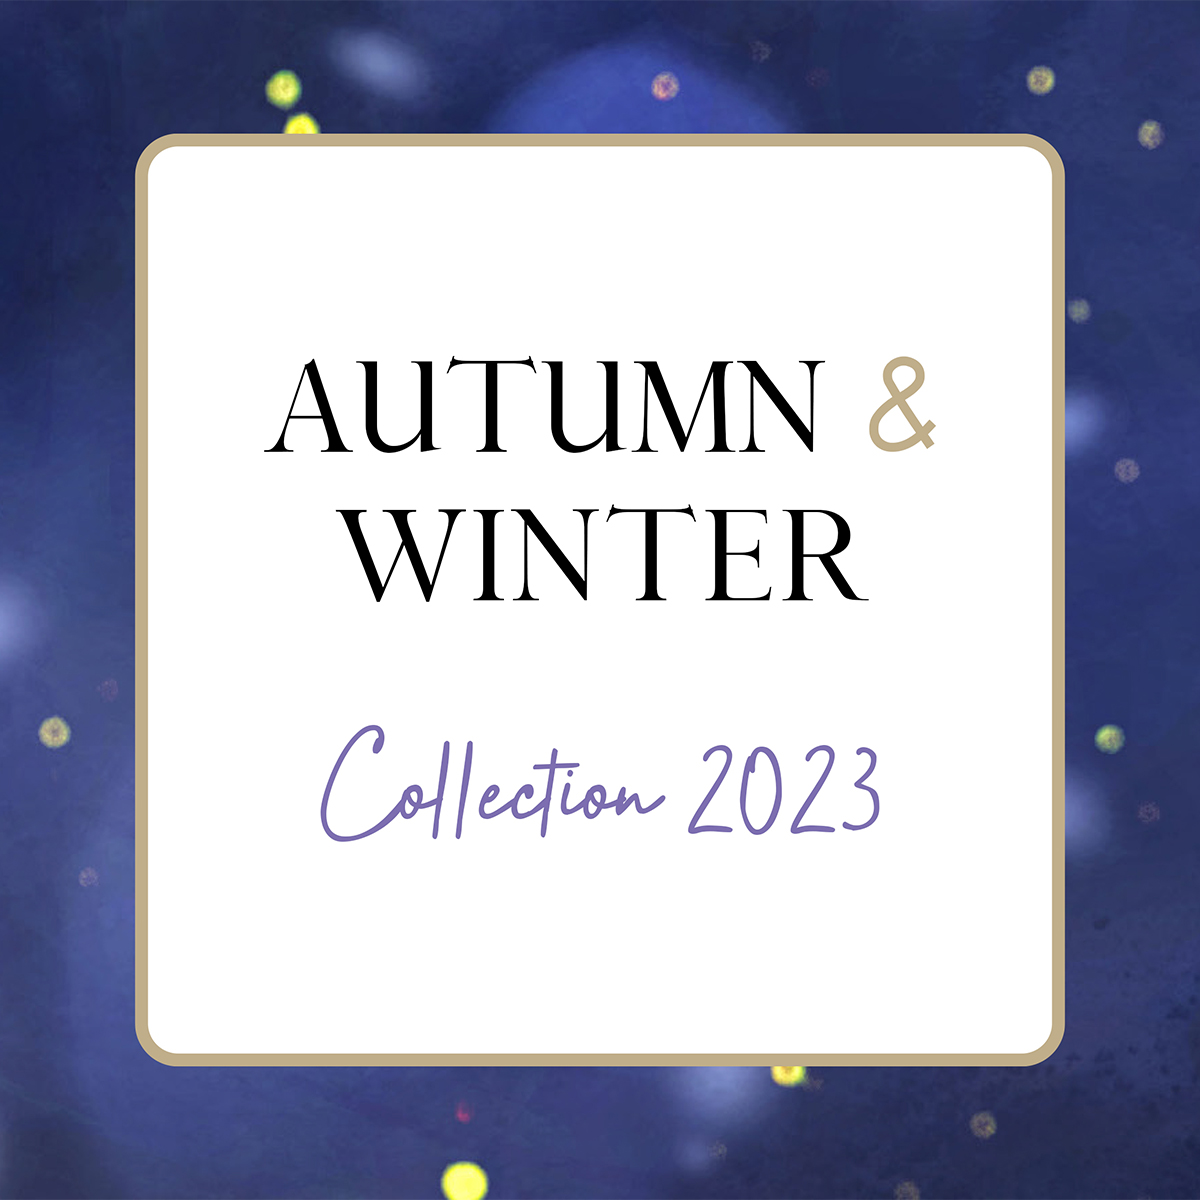 Autumn & Winter Collection 2023